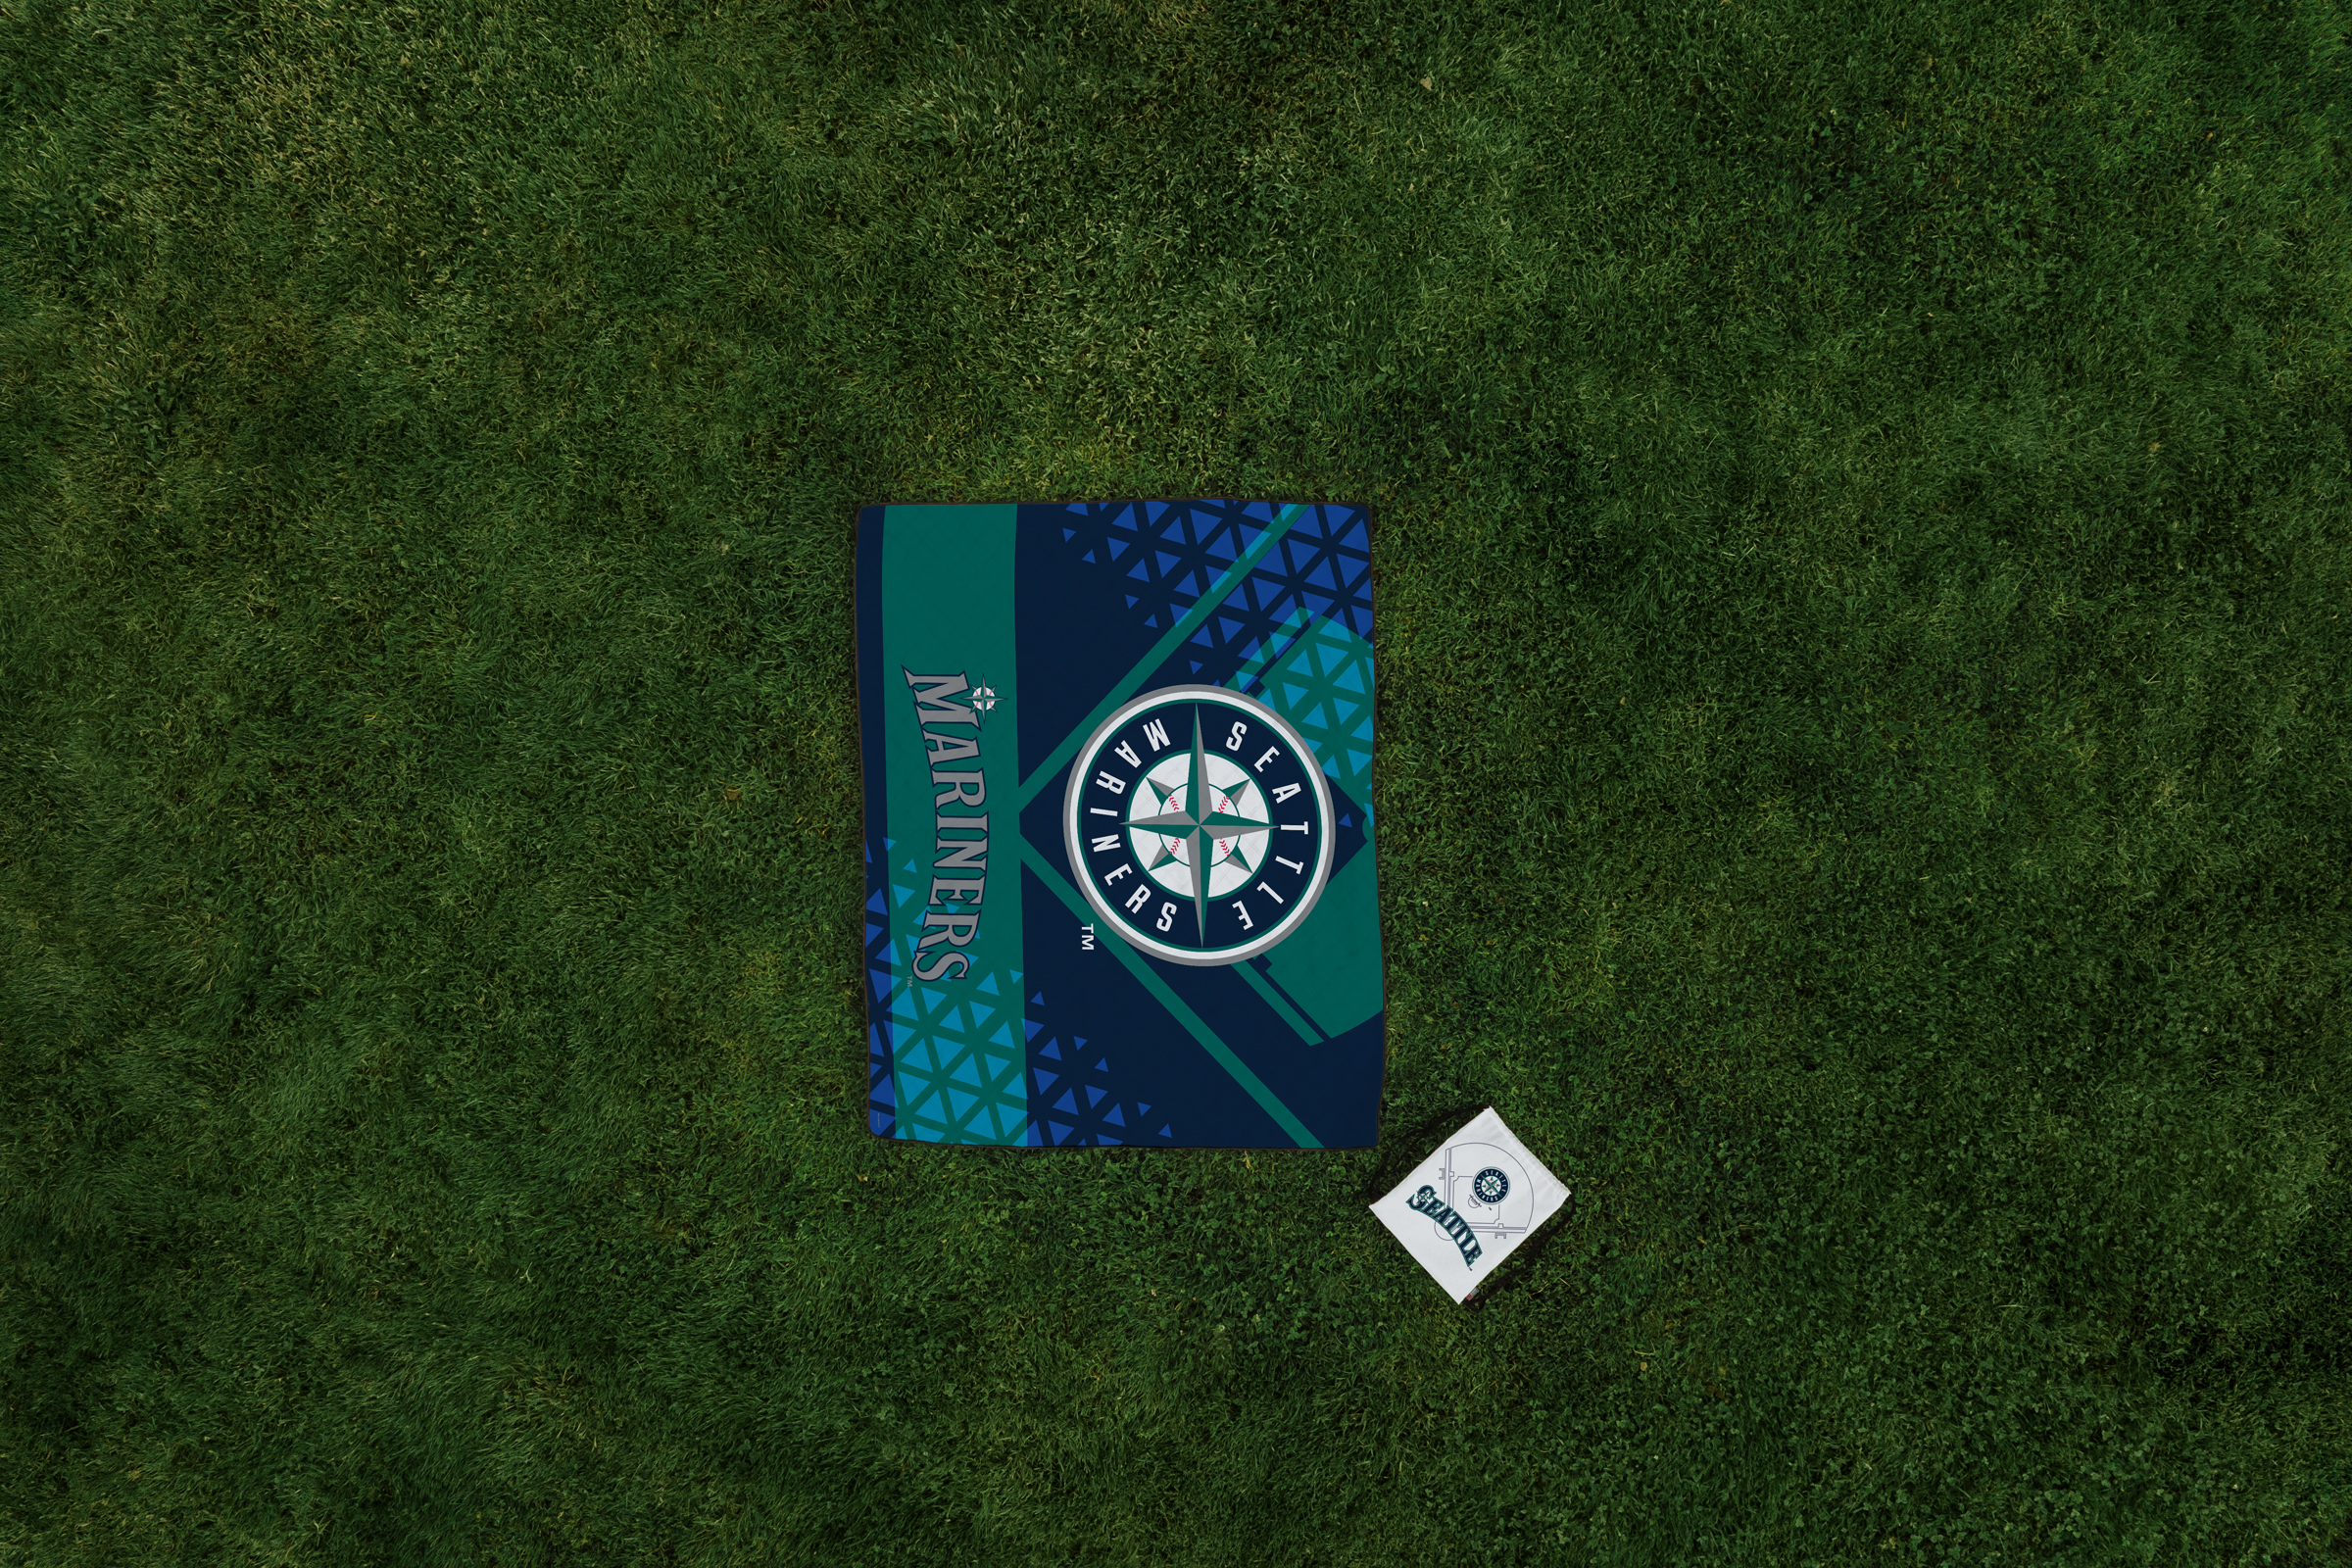 Seattle Mariners - Impresa Picnic Blanket